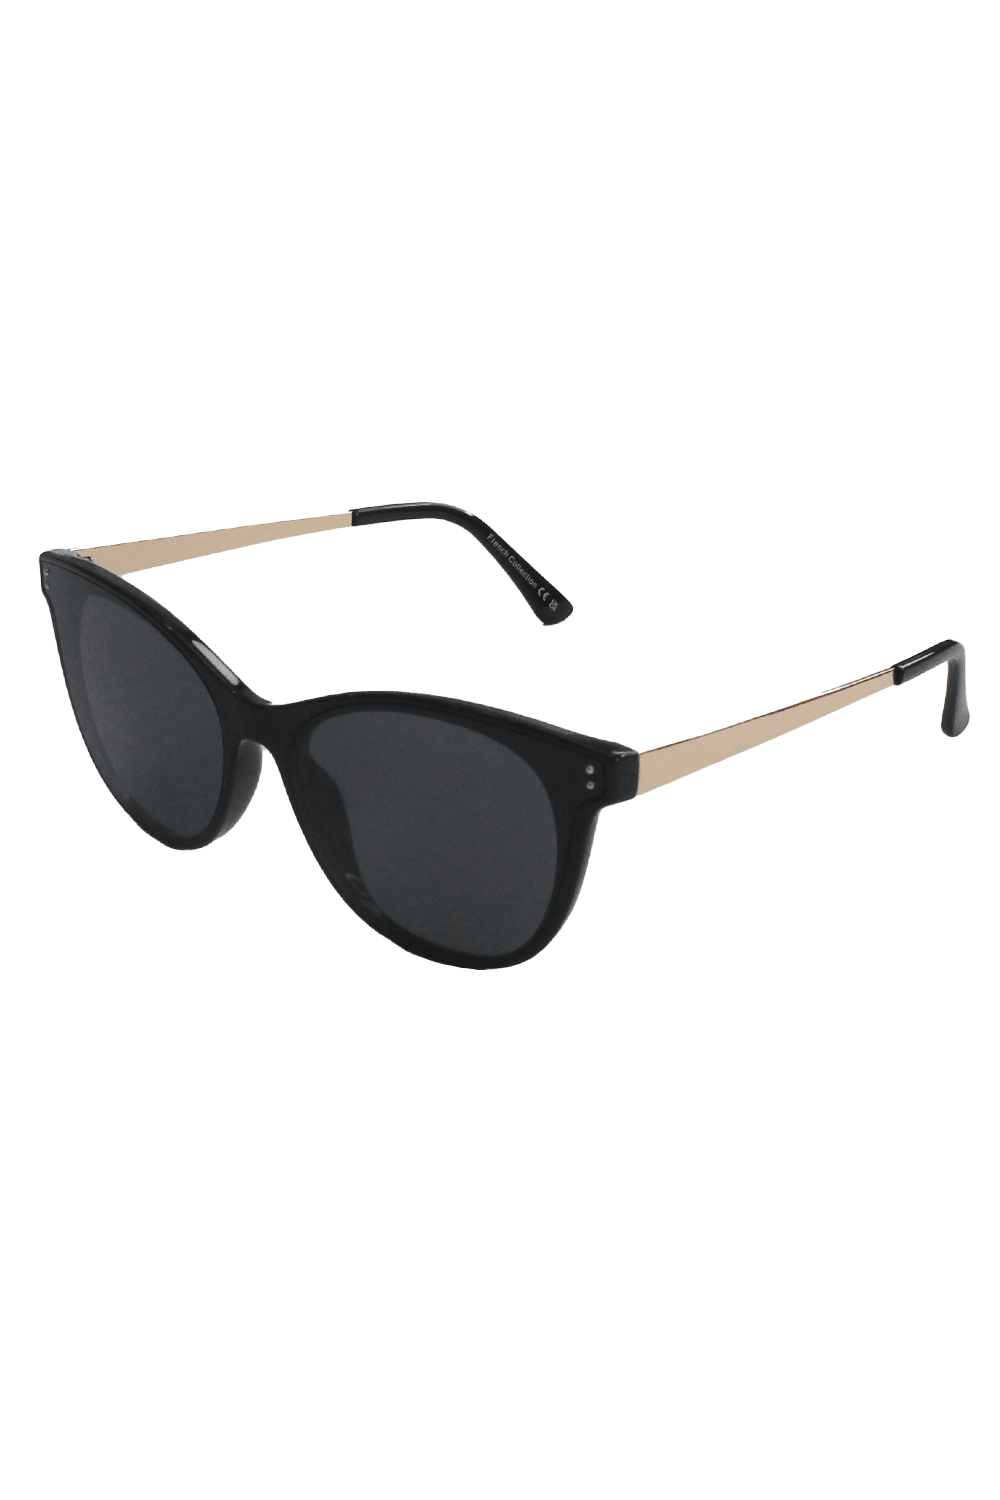 Jovanna Sunglasses Black sunglasses